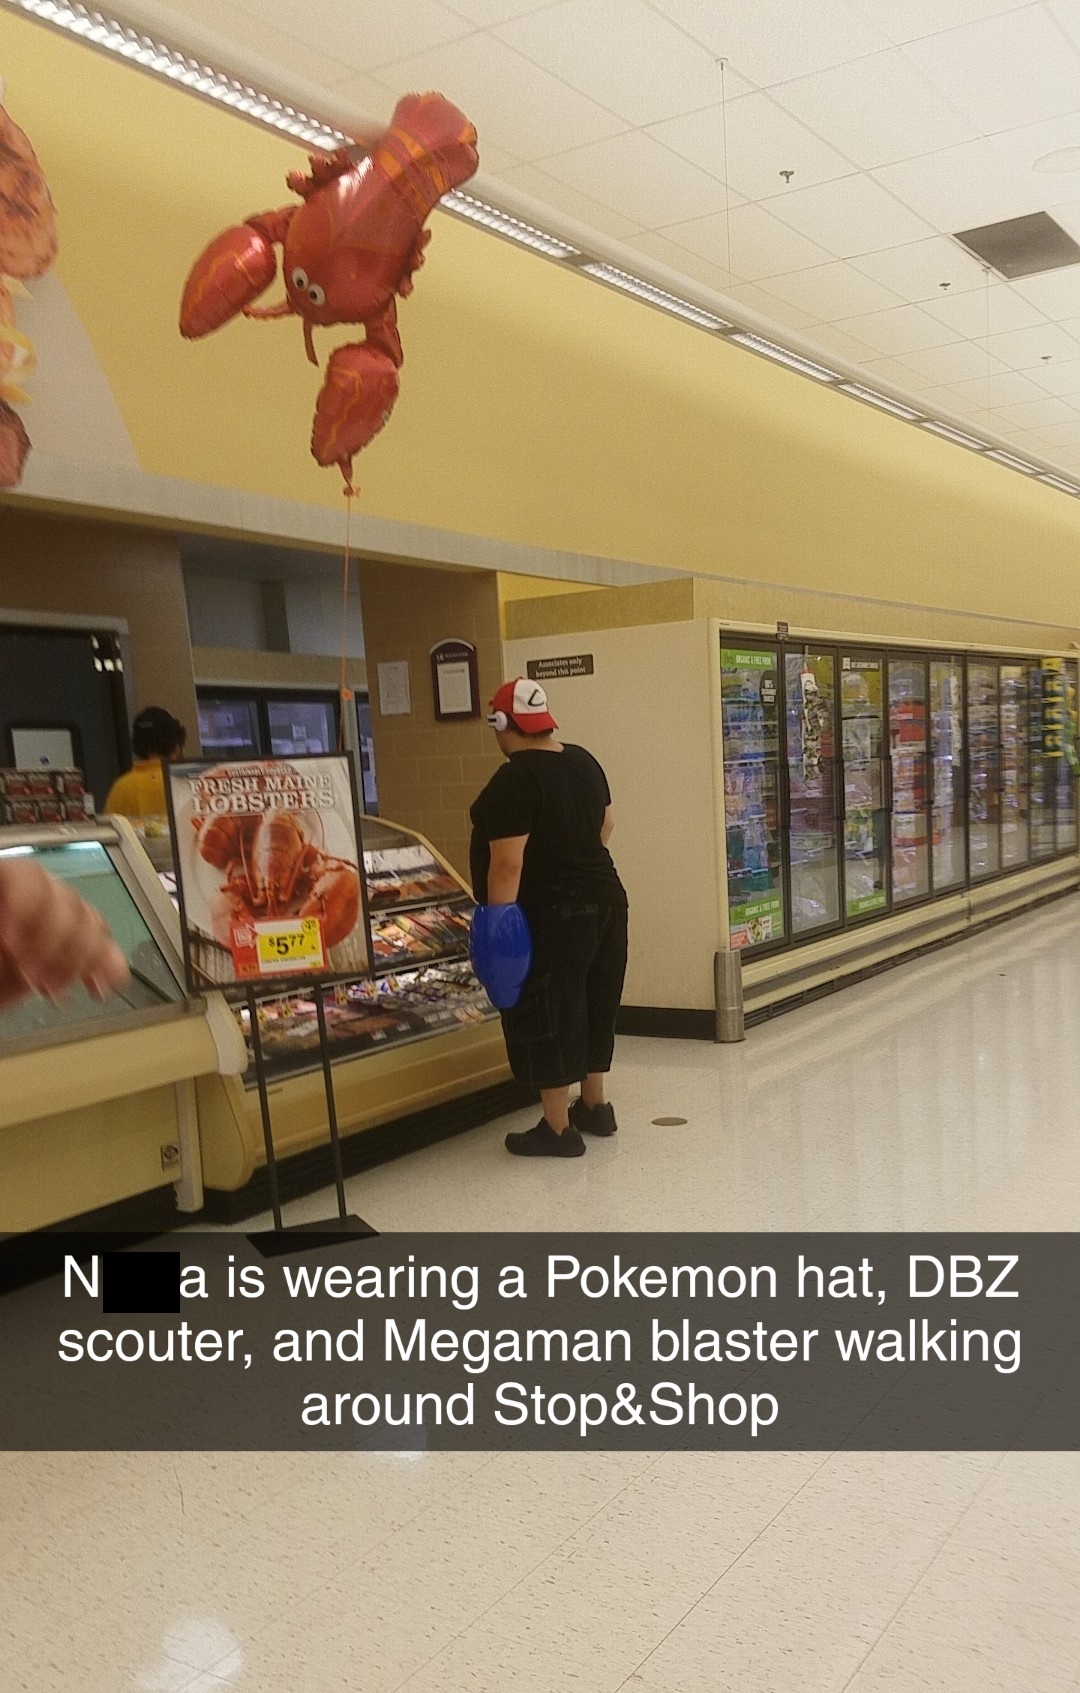 supermarket - N a is wearing a Pokemon hat, Dbz scouter, and Megaman blaster walking around Stop&Shop